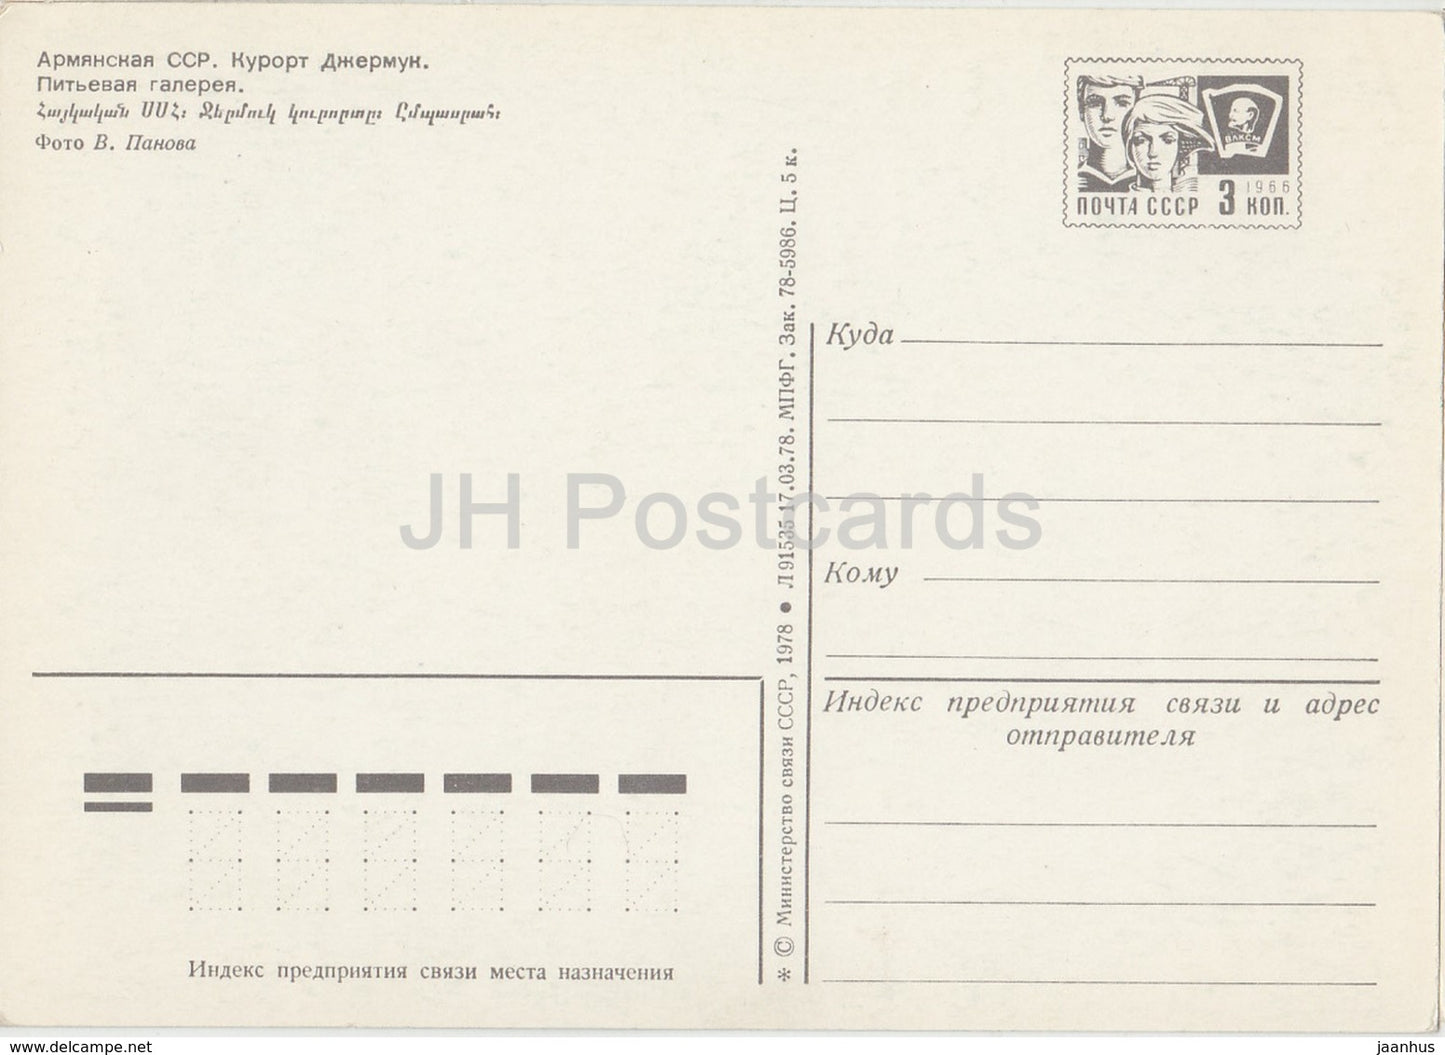 Jermuk Resort - Drinking Gallery - postal stationery - 1978 - Armenia USSR -  unused